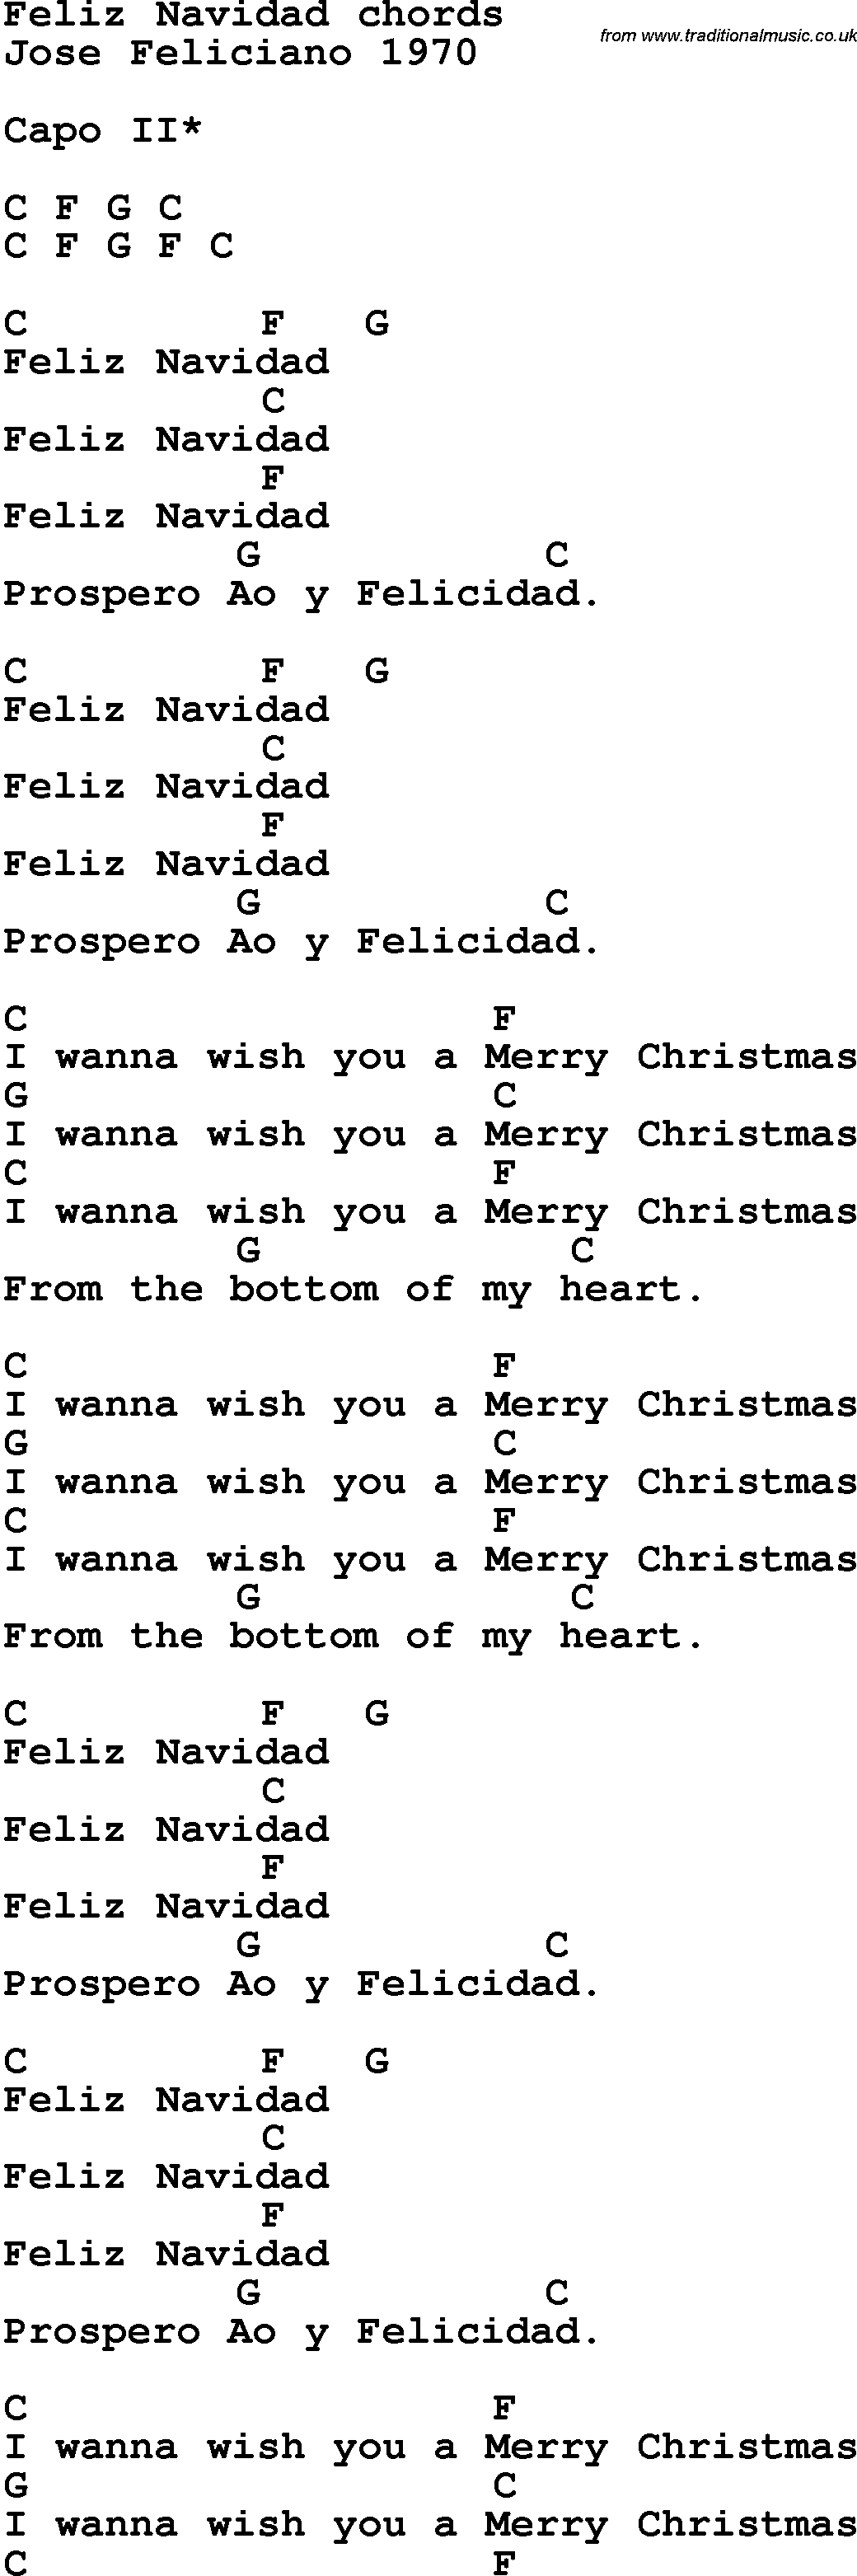 Song Lyrics with guitar chords for Feliz Navidad